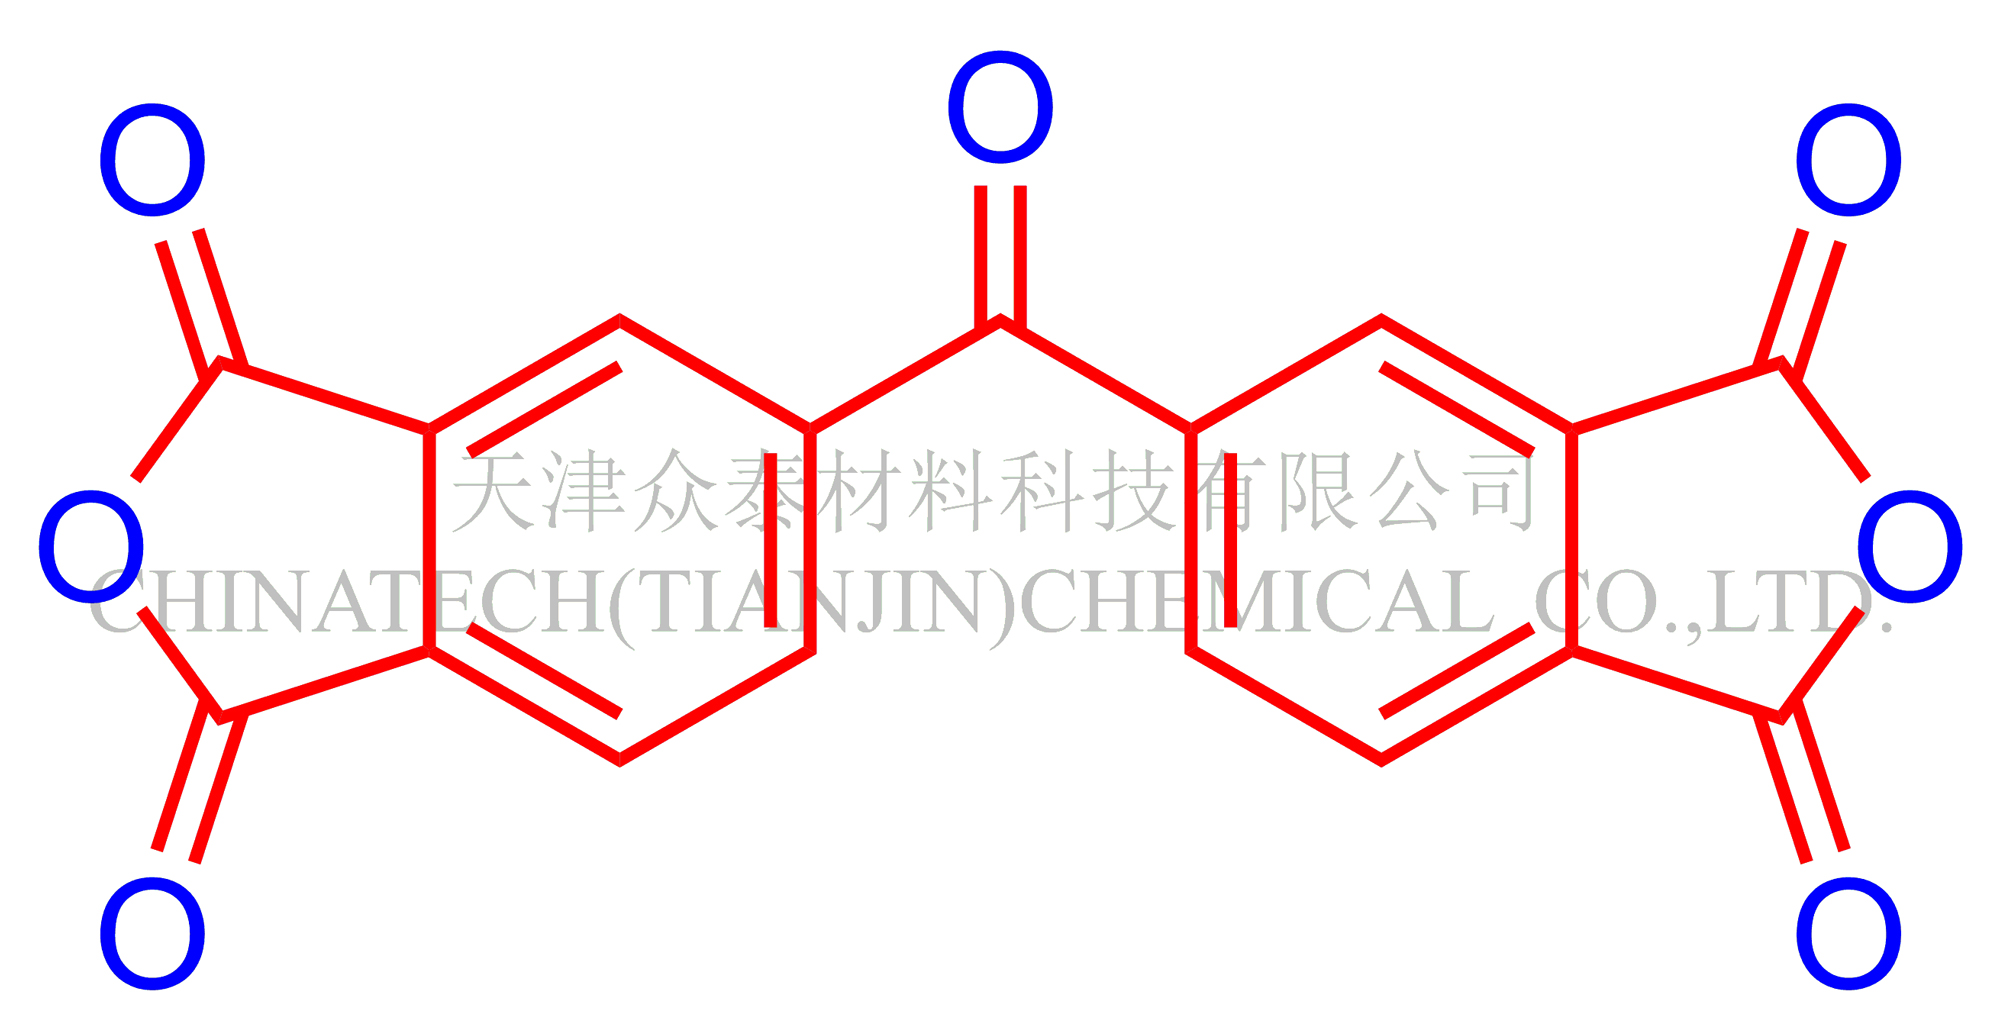 3,3',4,4'-Benzophenonetetracarboxylic dianhydride (BTDA）